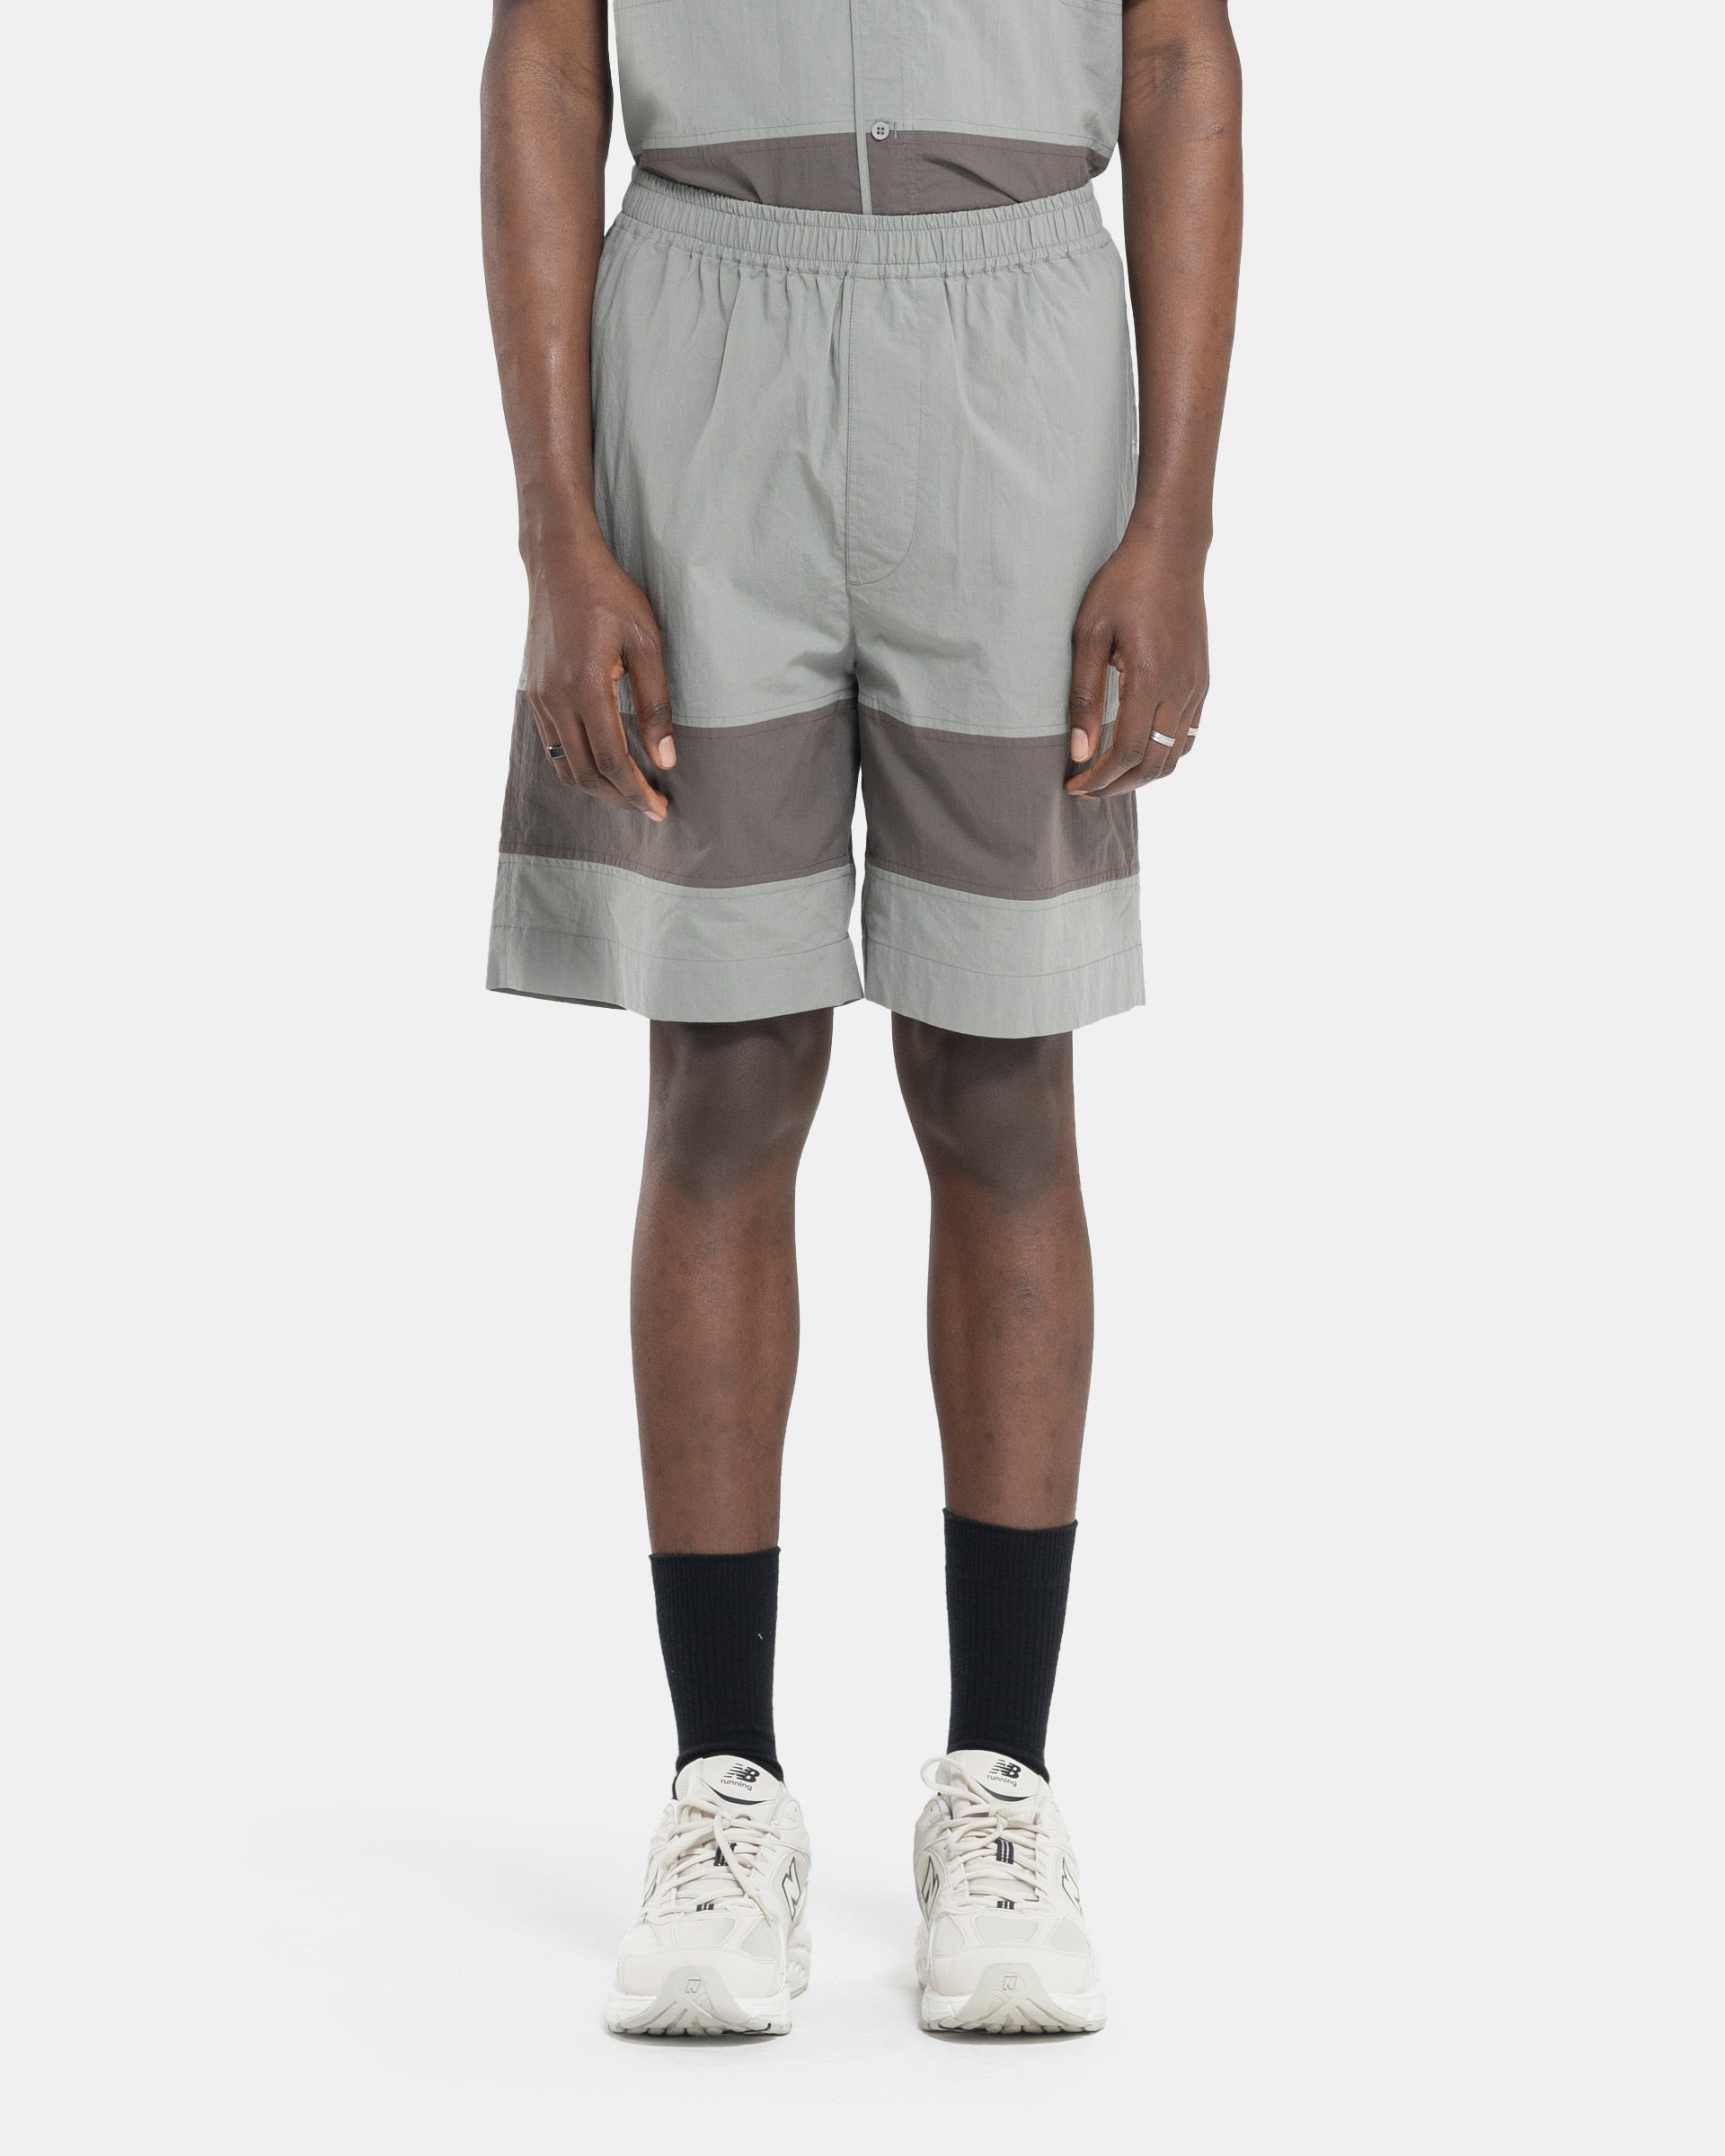 Model wearing Craig Green Barrel Shorts in Grey on white background